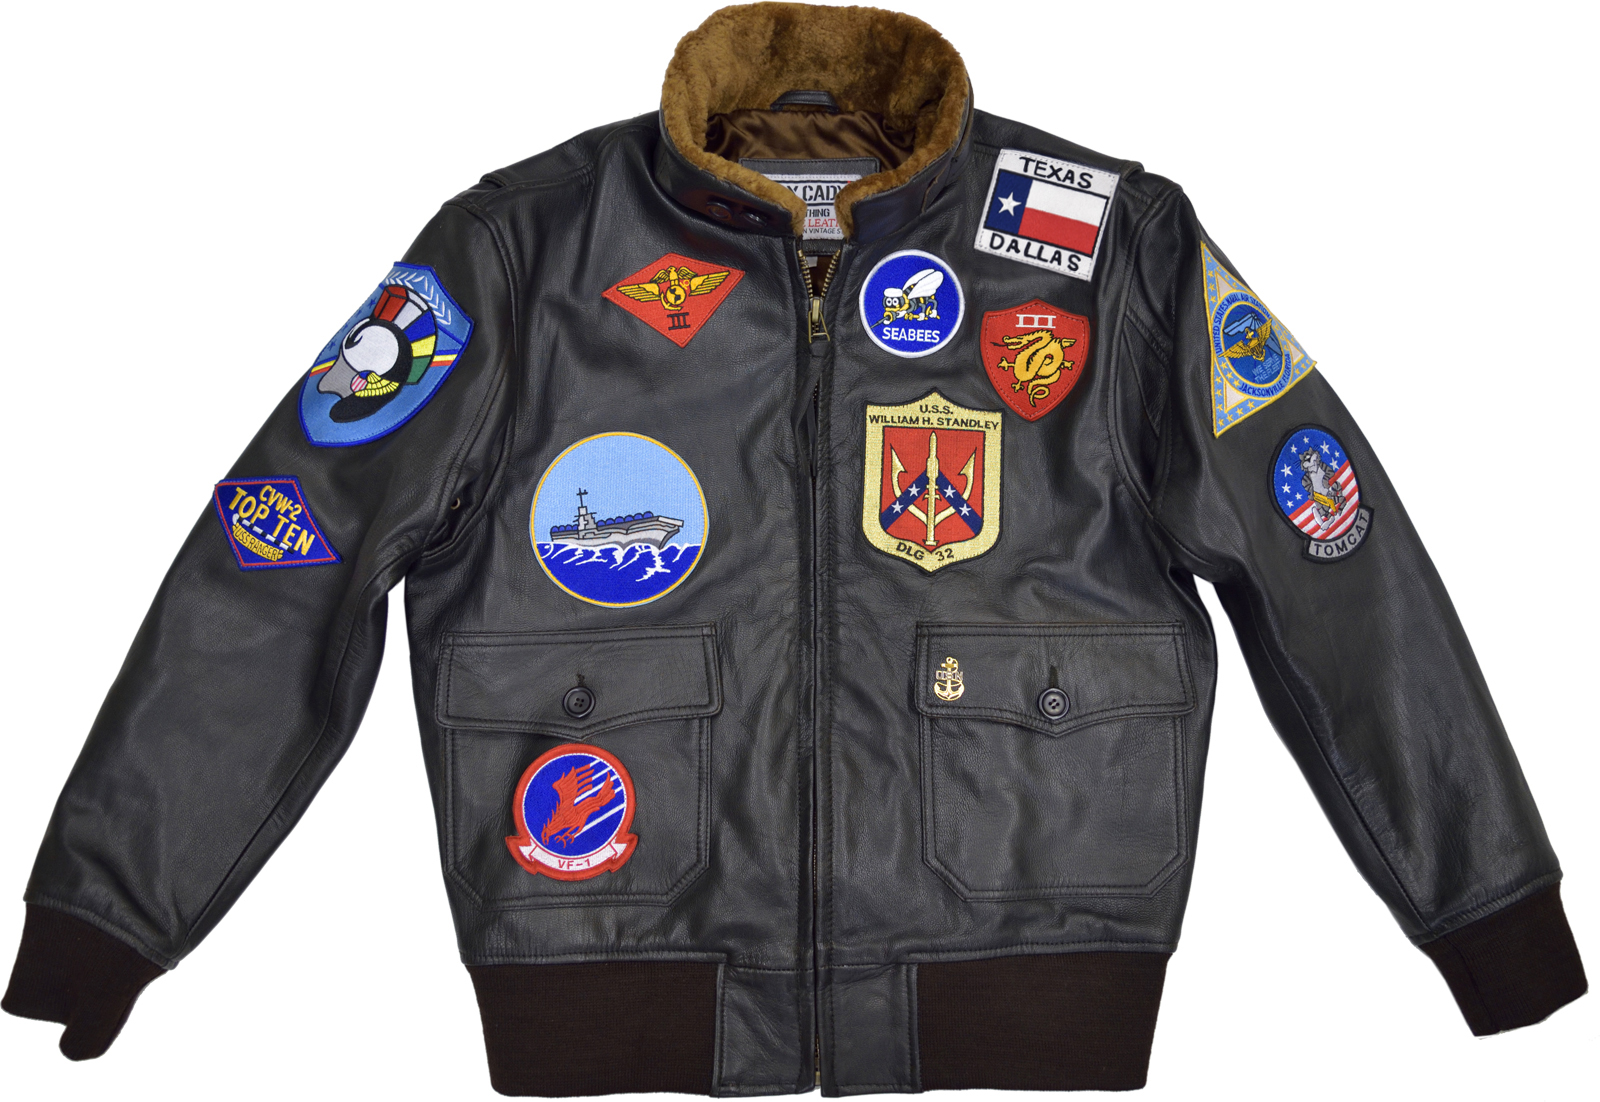 TOPGUN G-1 Leather Flight Jacket - MAX CADY